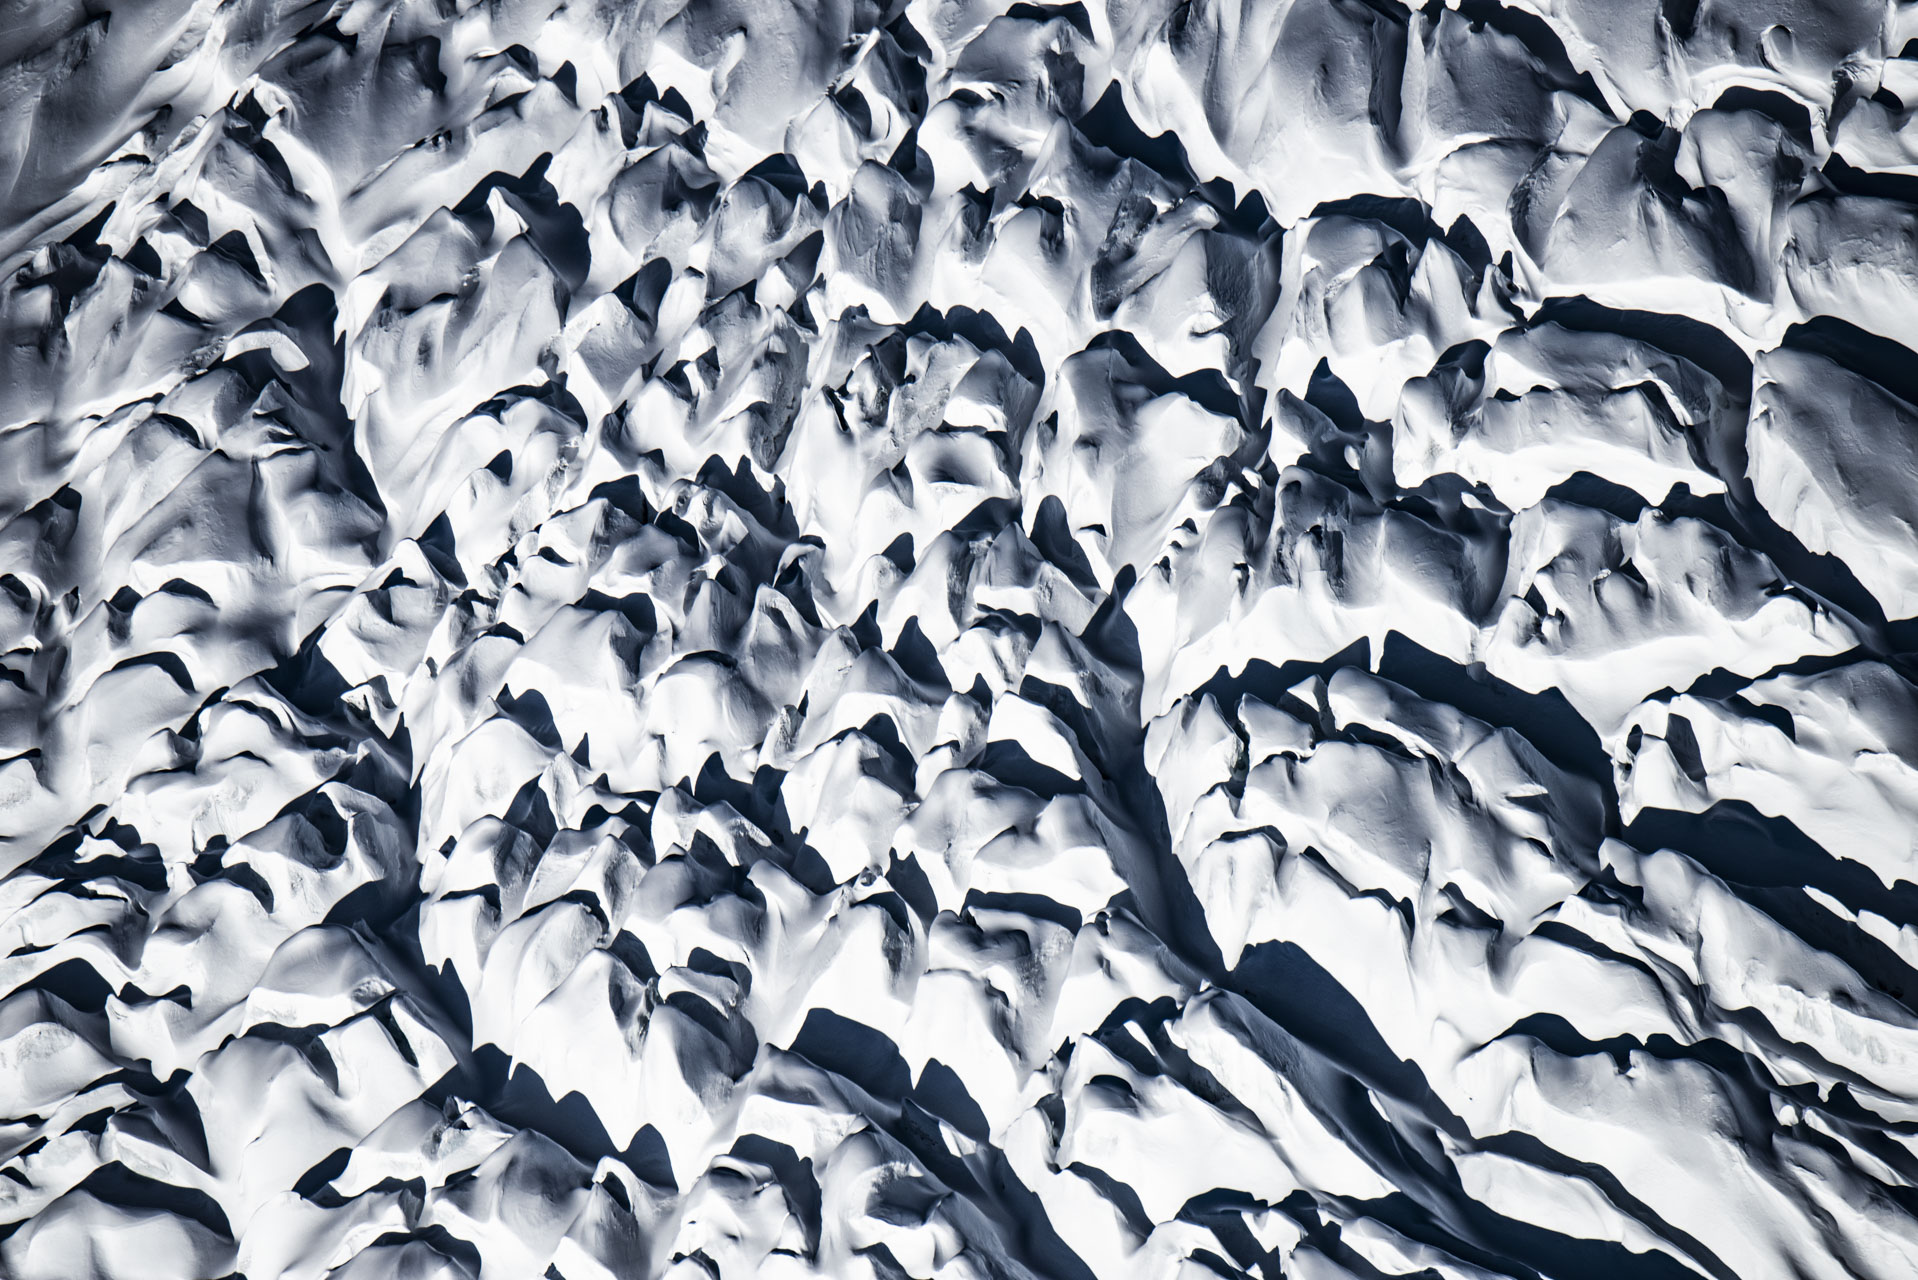 Alpine glacier - Mountain image with snow and crevasses